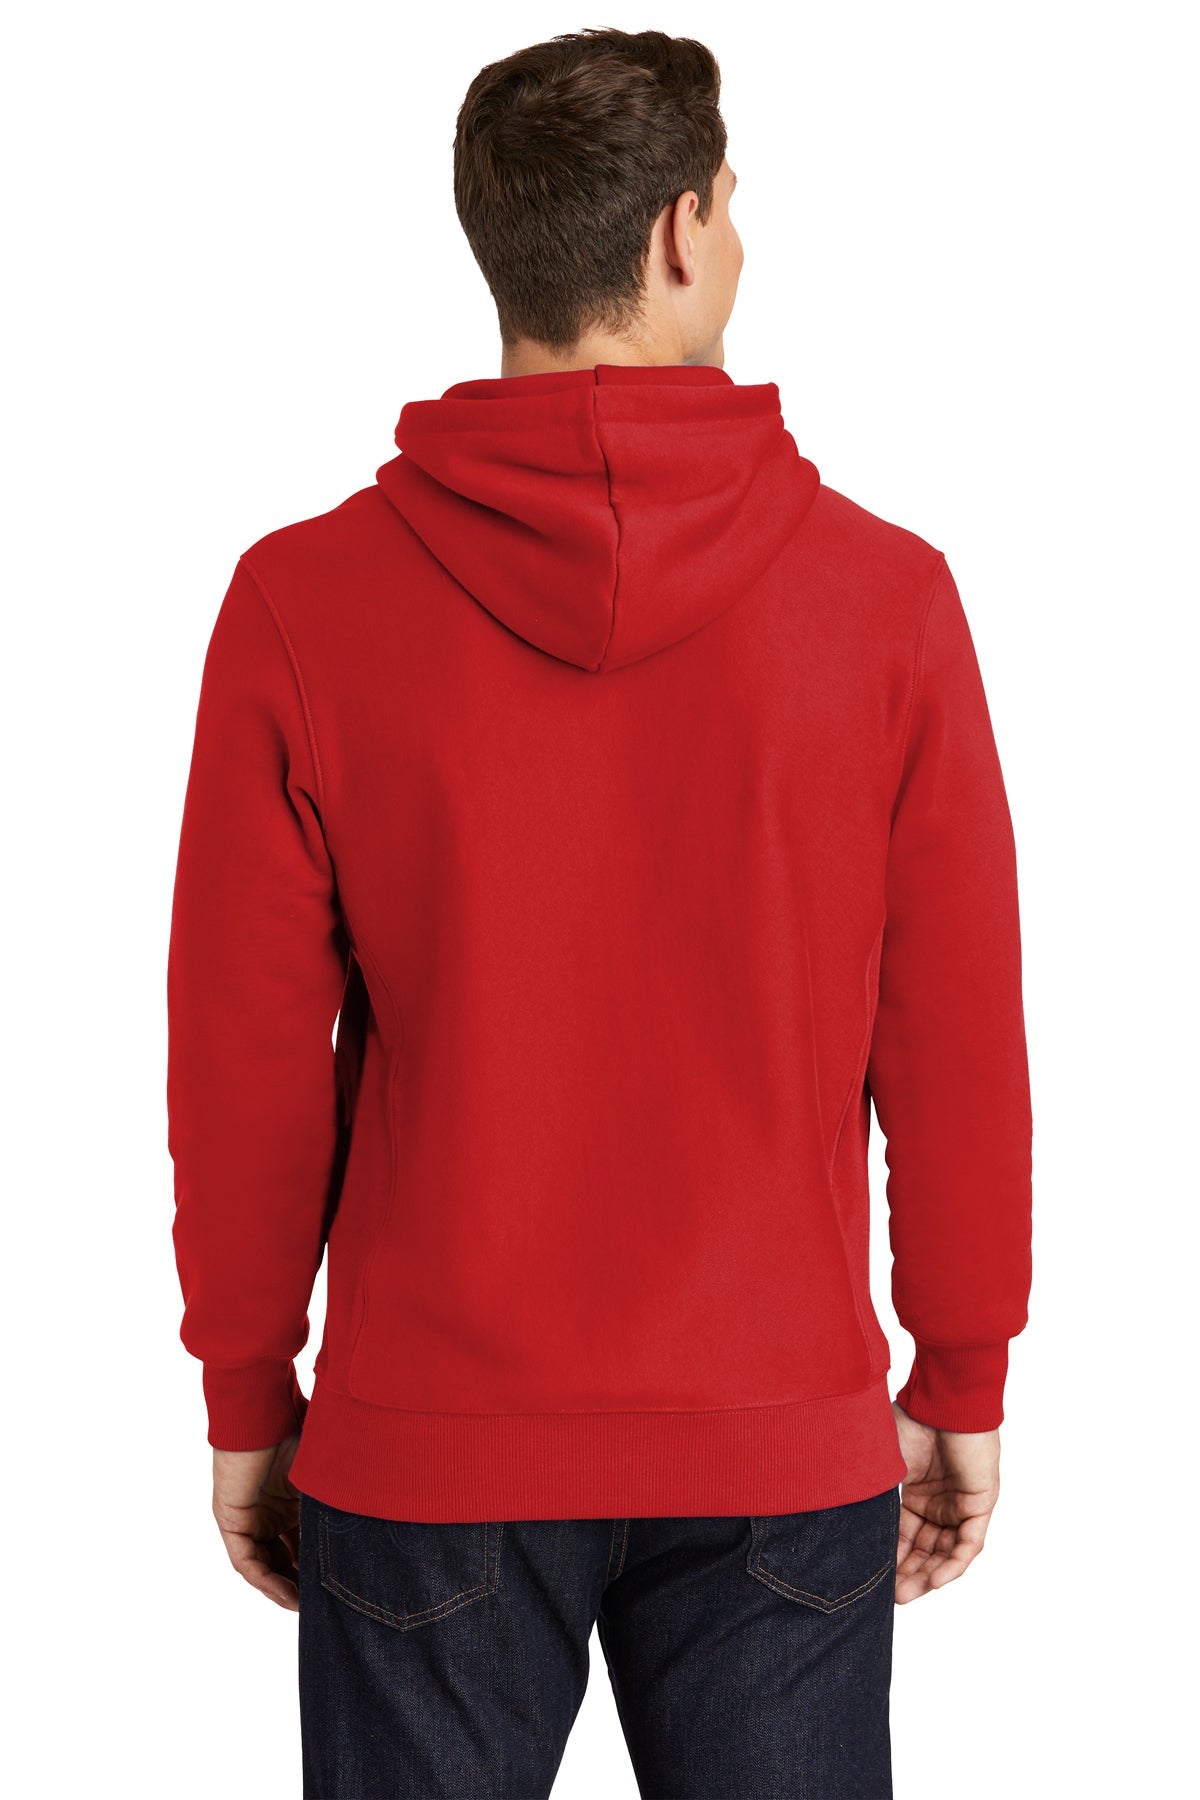 sport-tek_f281 _red_company_logo_sweatshirts